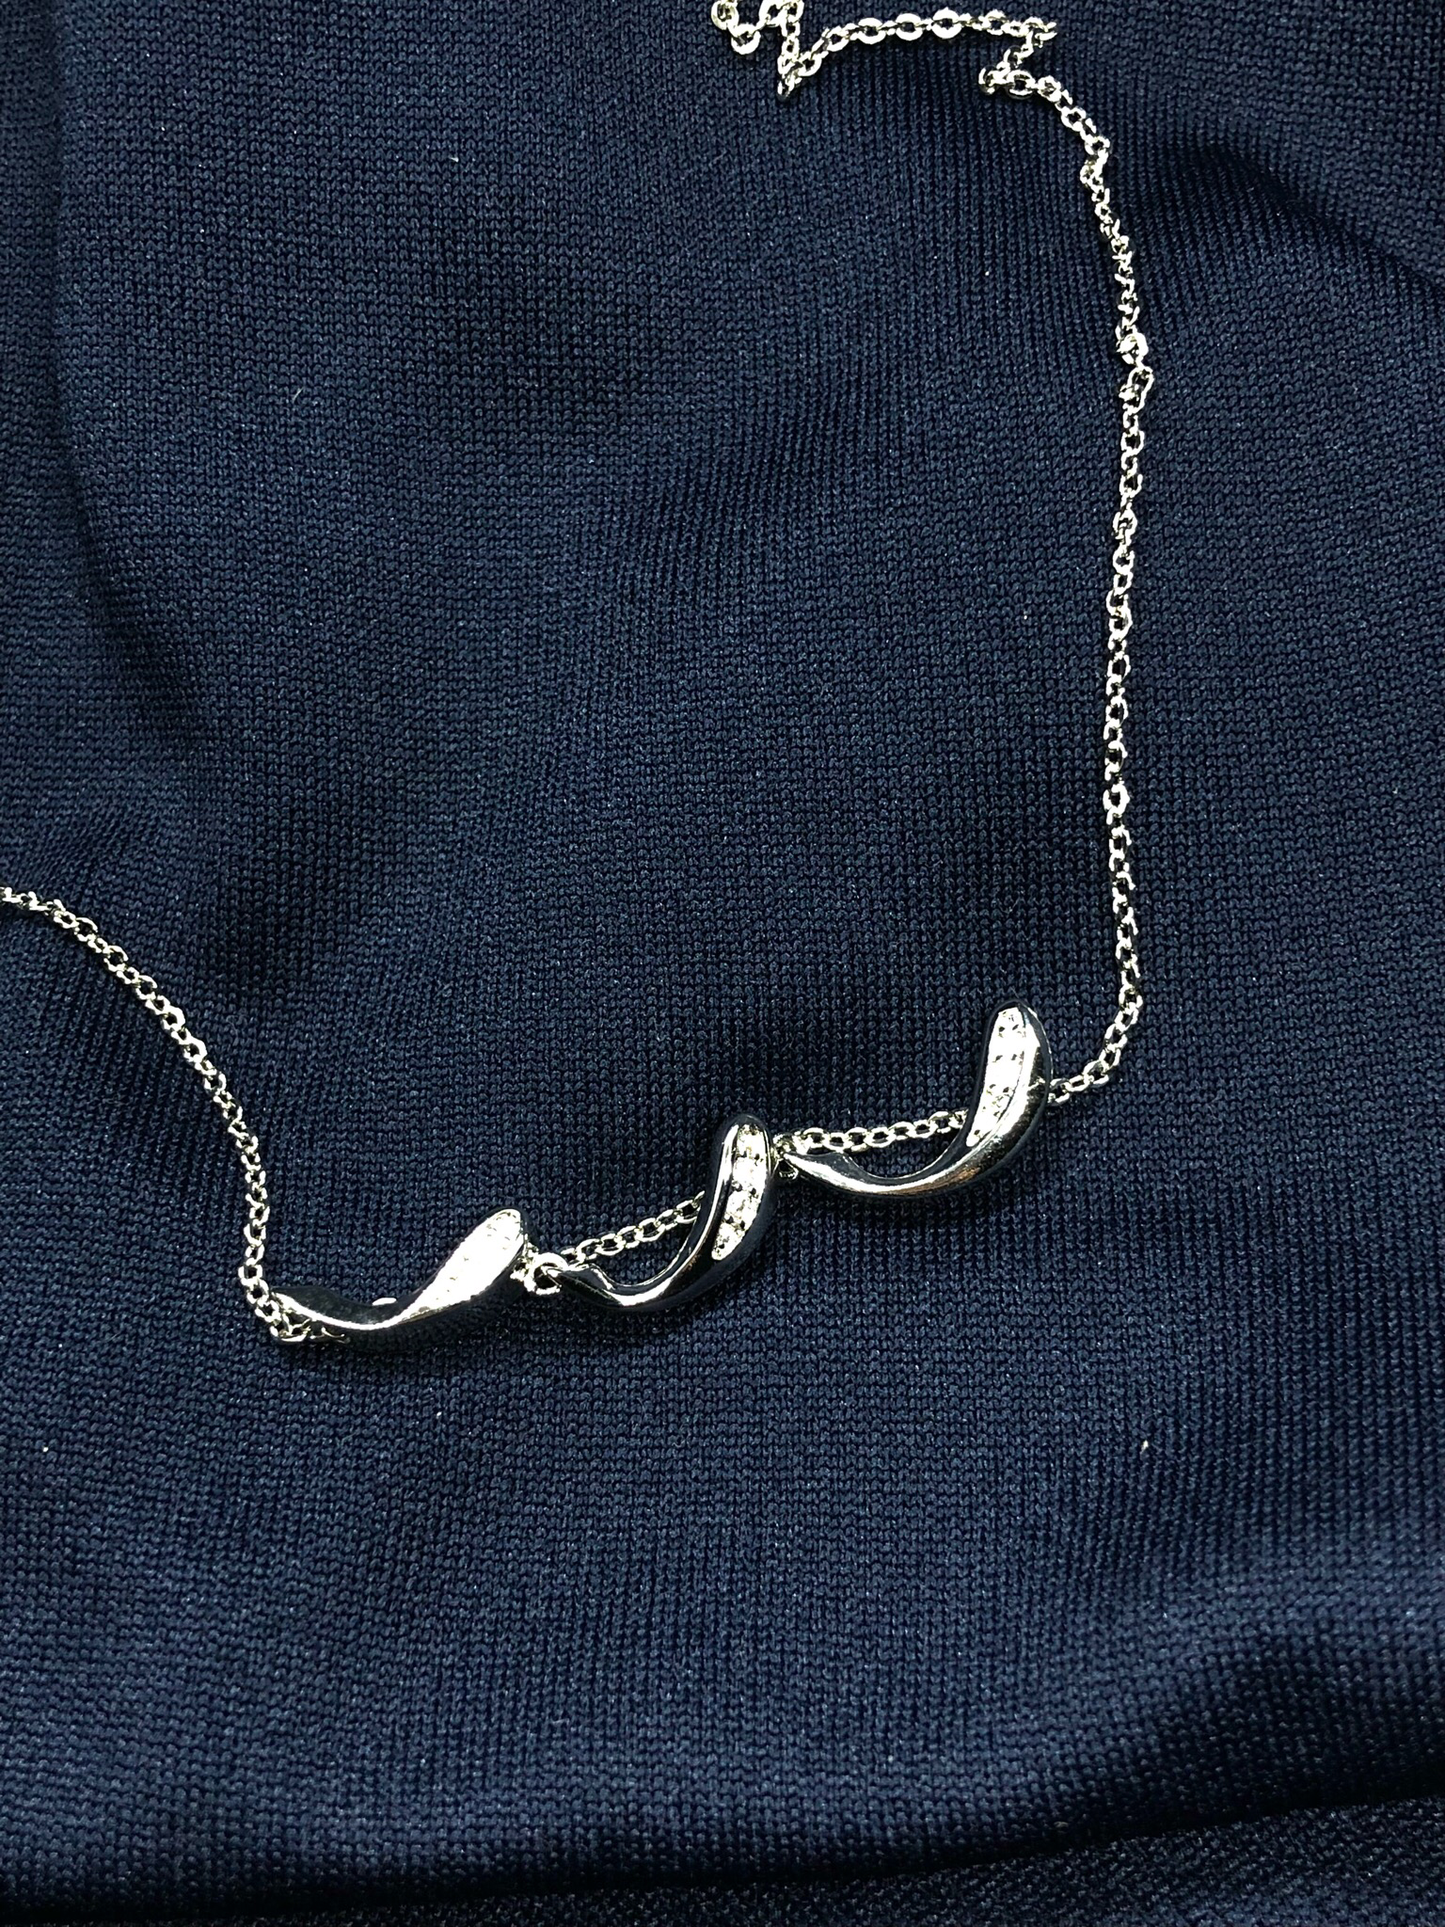 Infigua Necklace